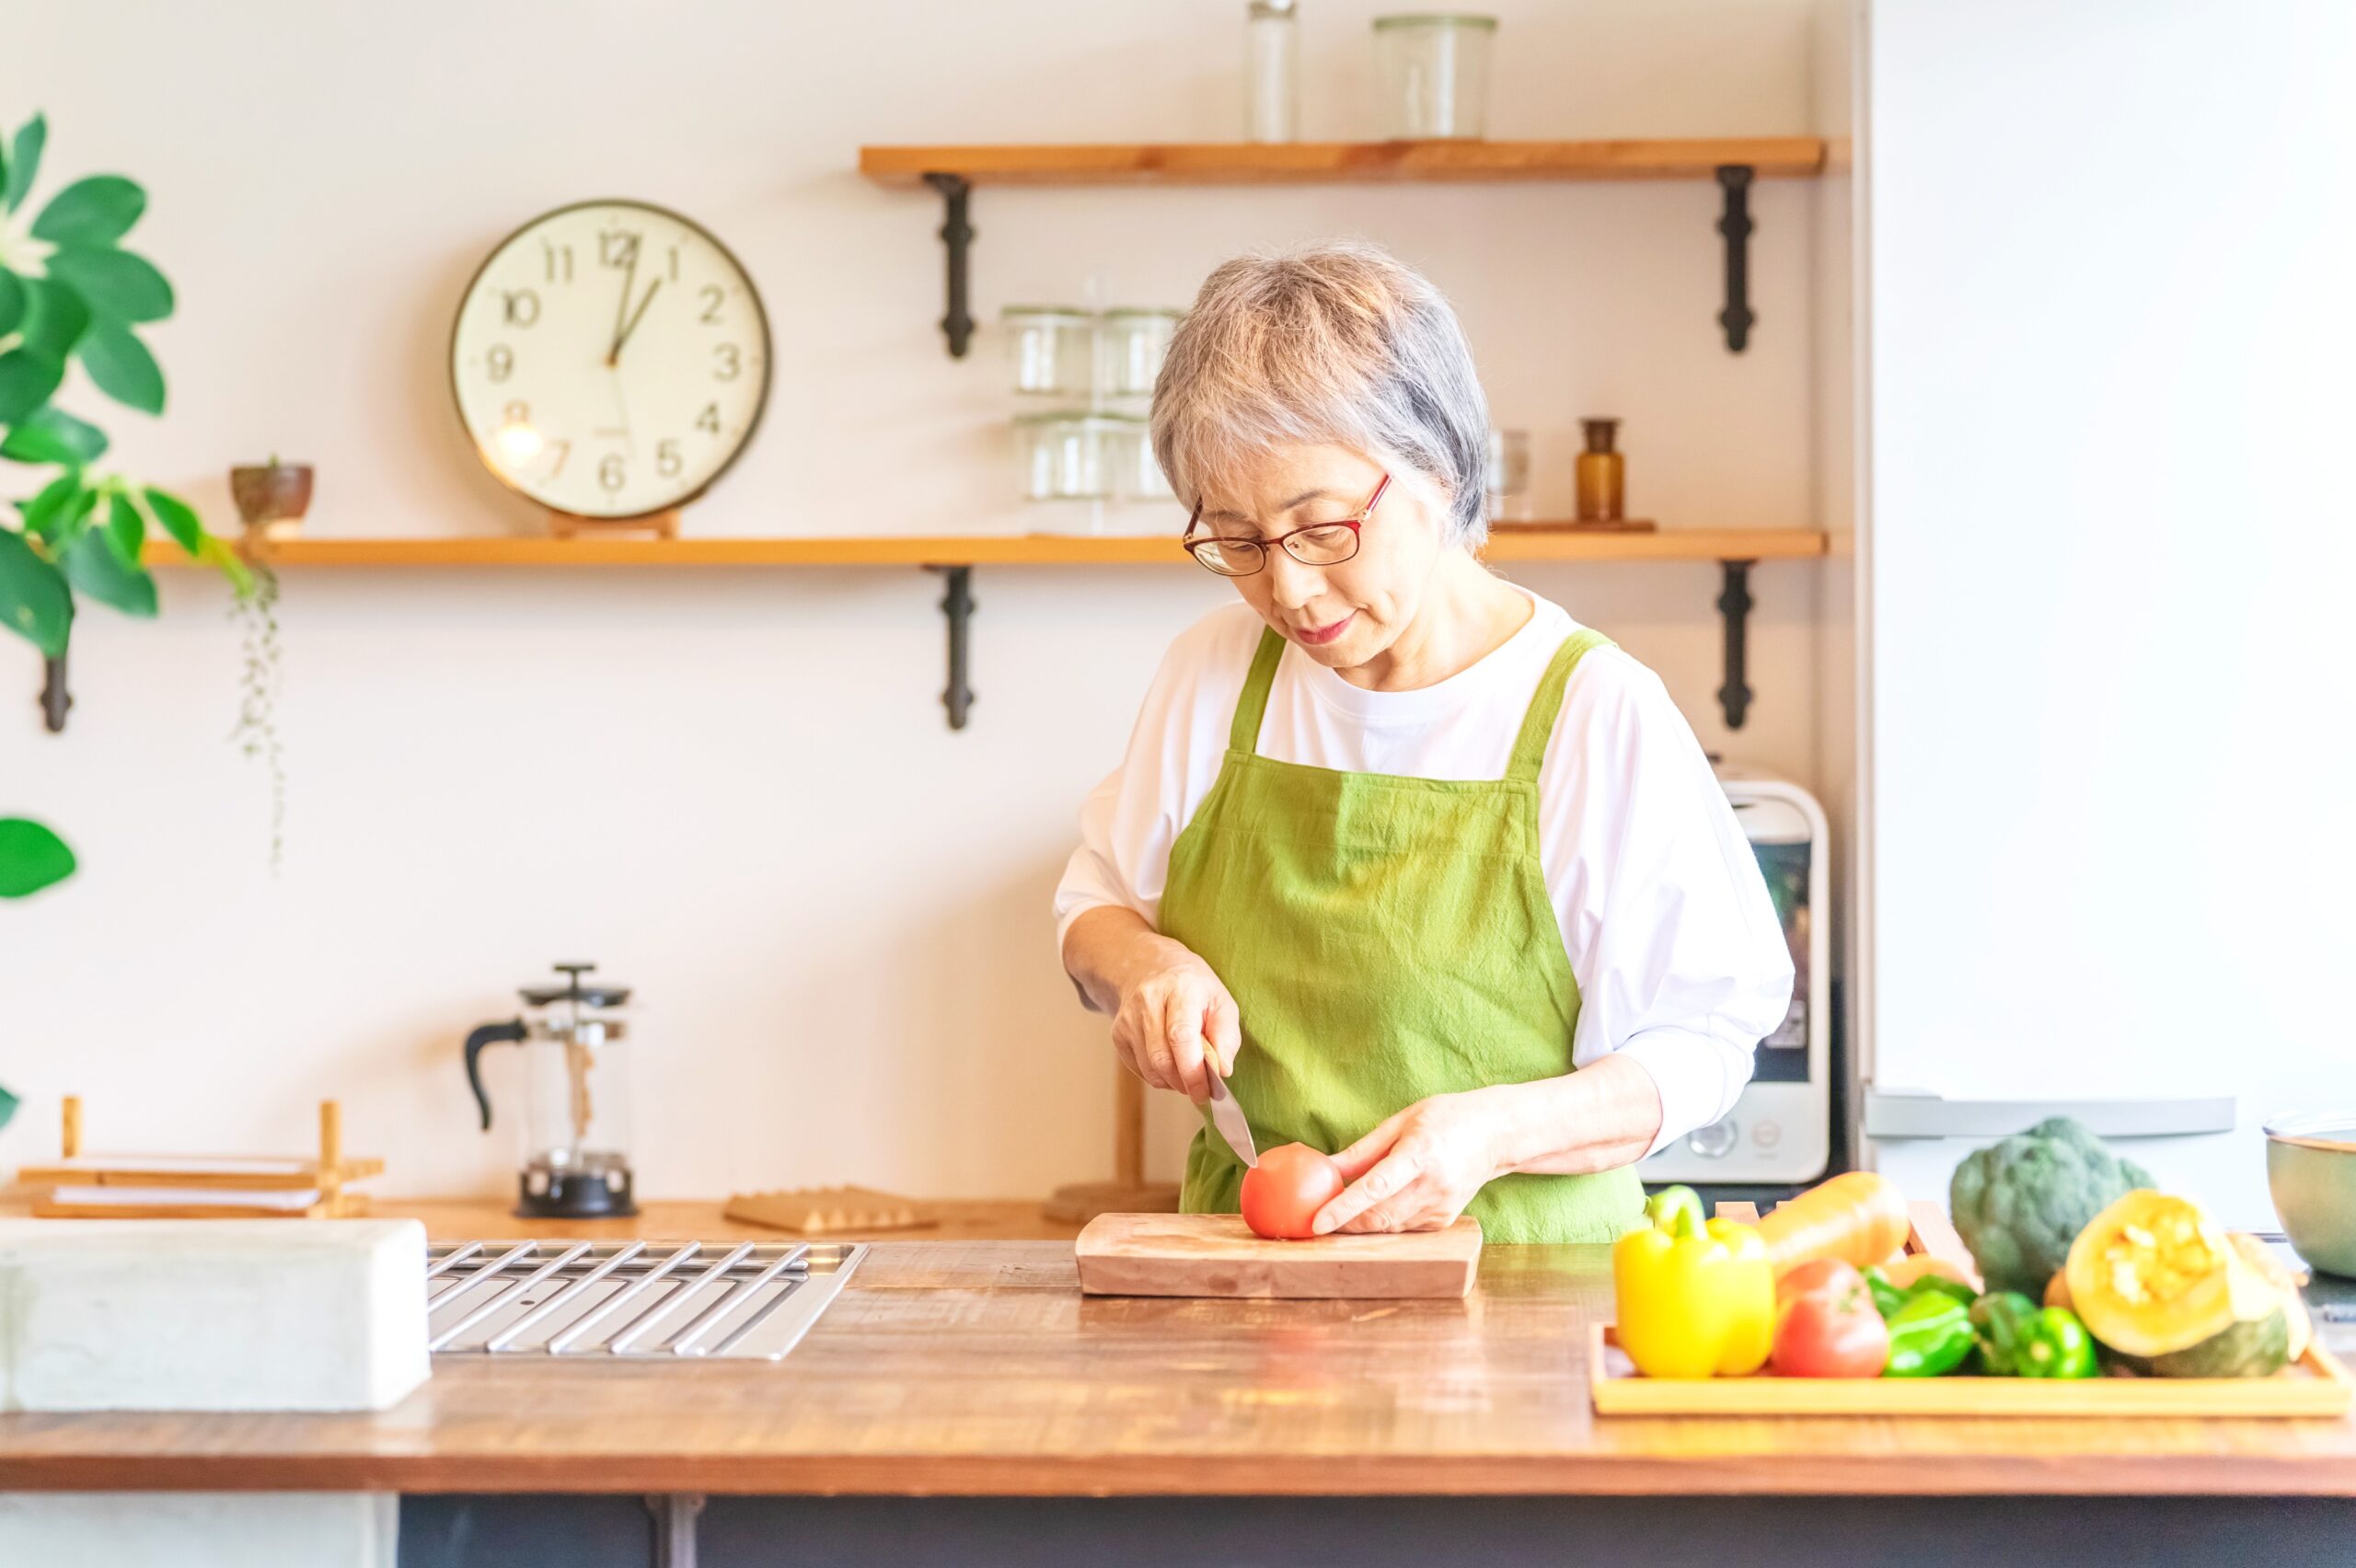 <img src="elderly.jpg" alt="elderly woman cooking healthy dinner"/>